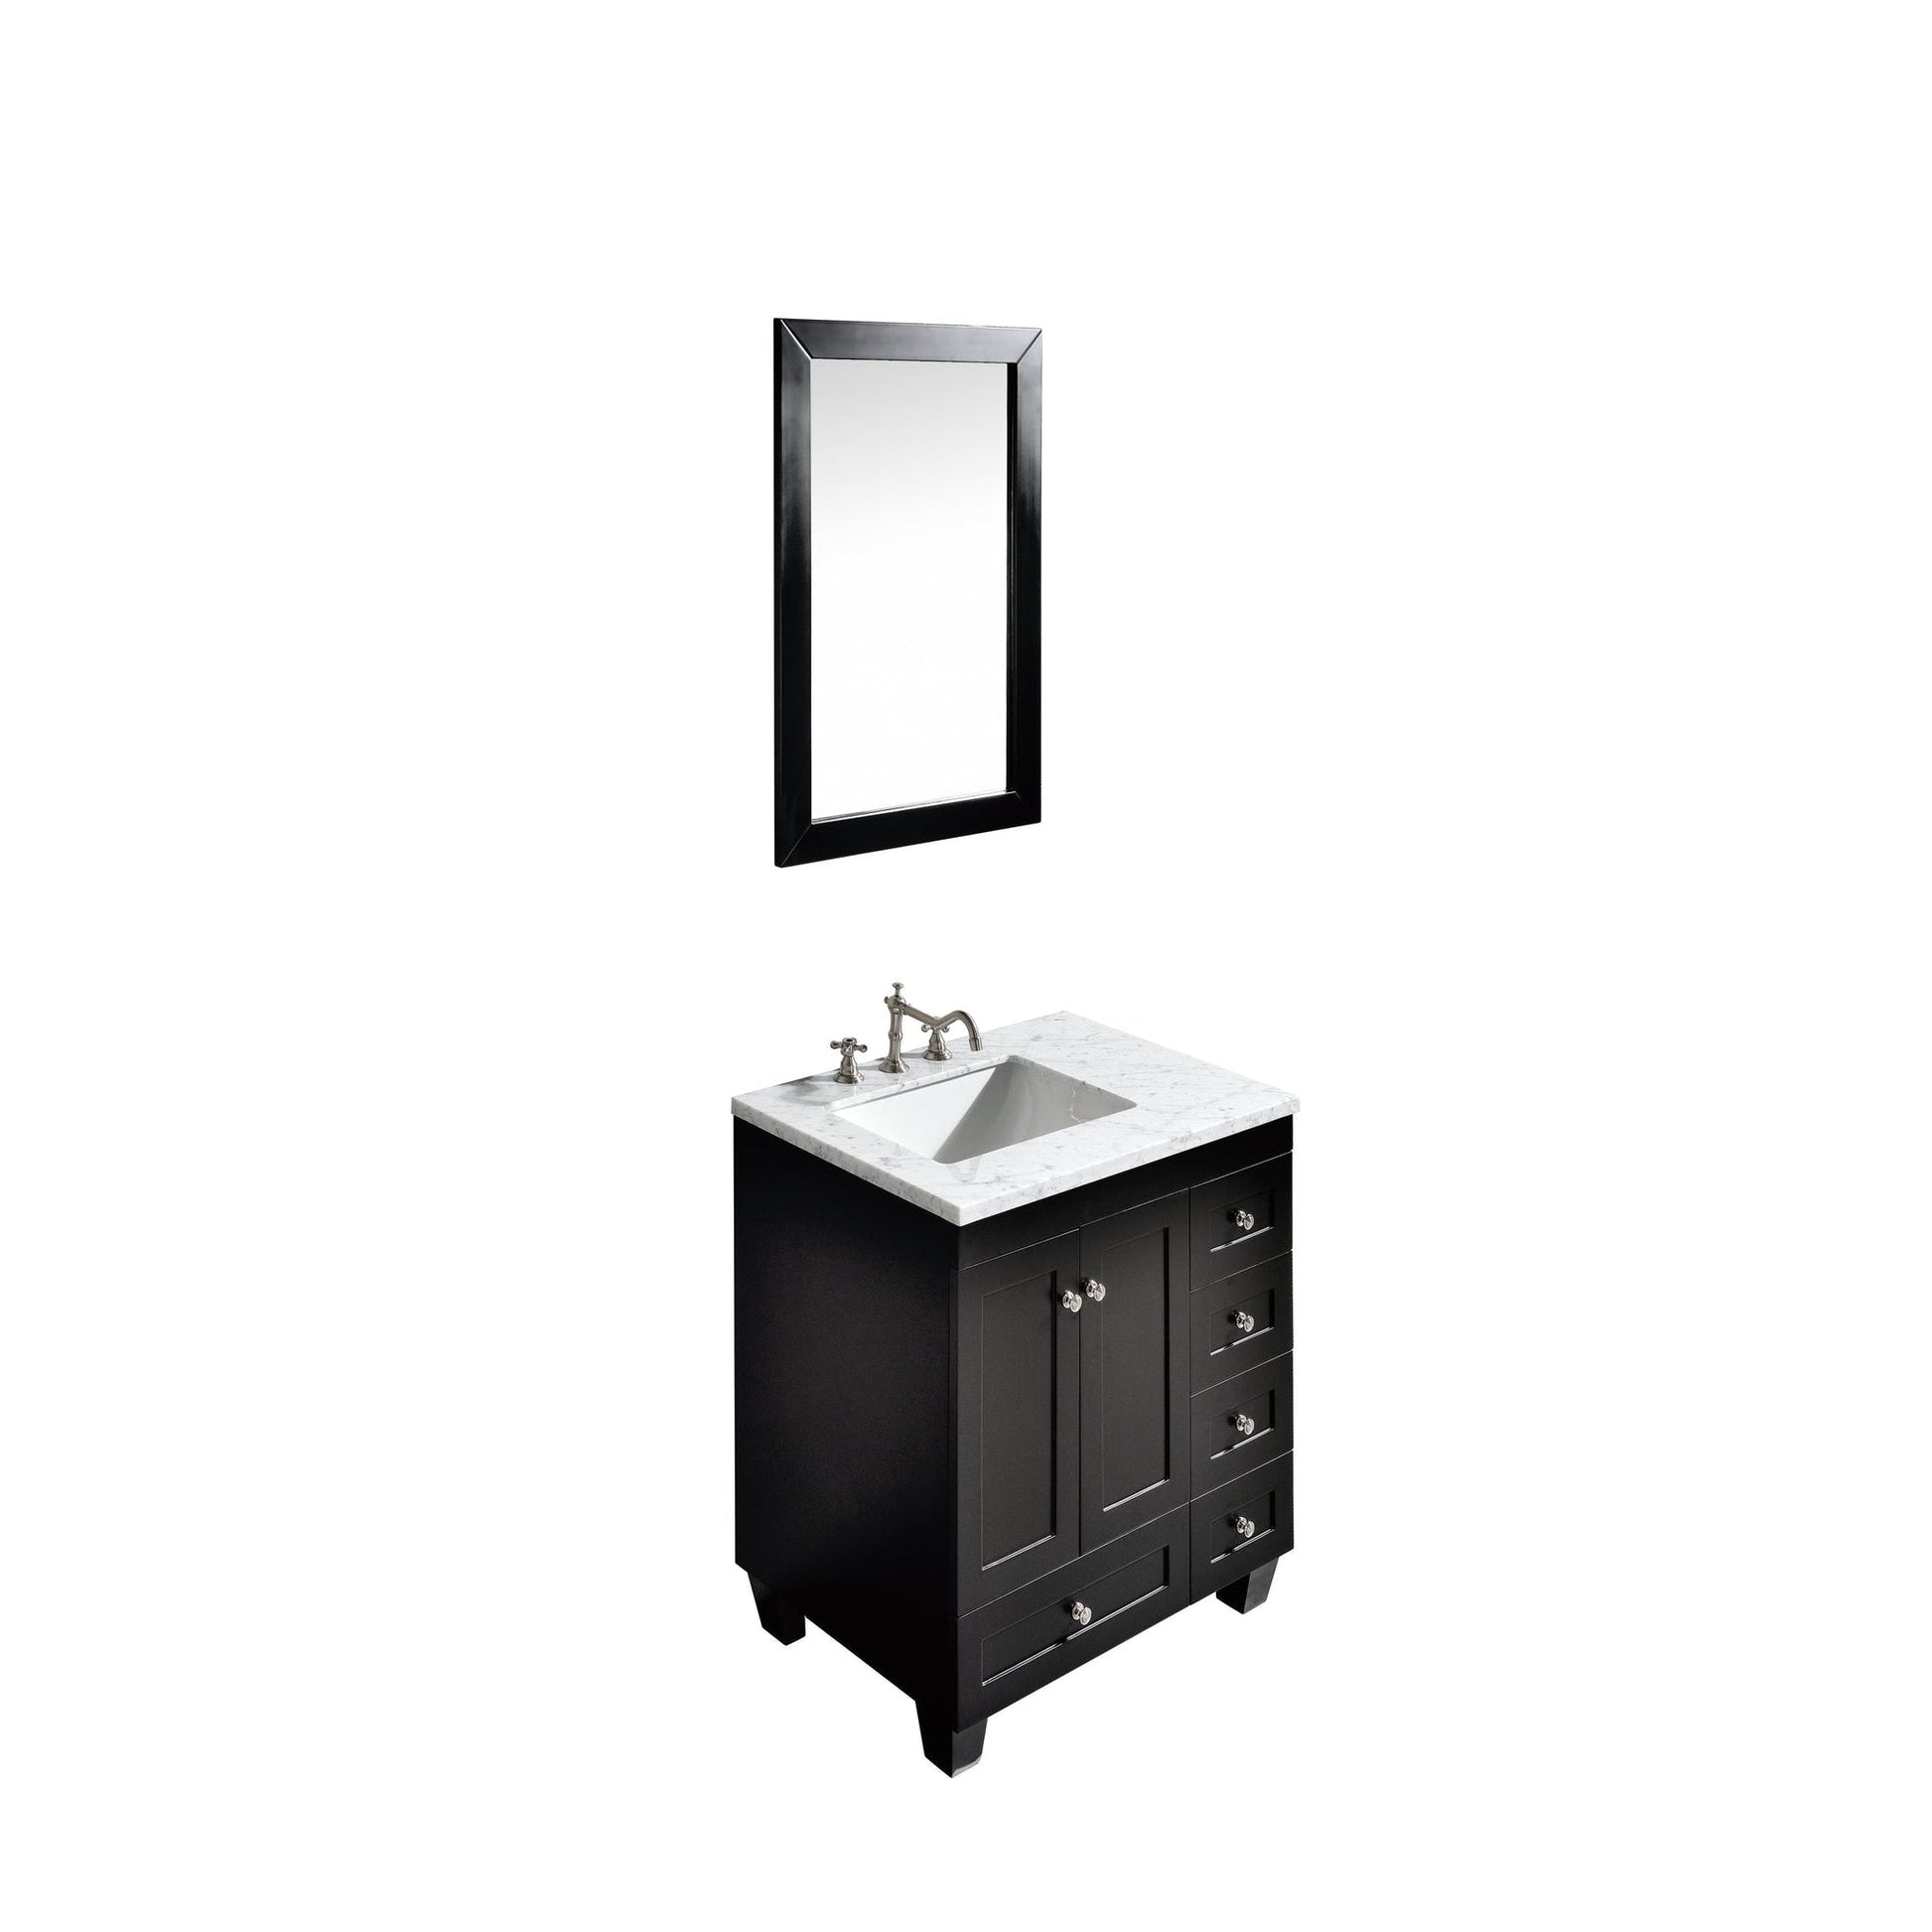 Eviva Acclaim 28" x 34" Espresso Freestanding Bathroom Vanity With White Carrara Marble Countertop and Single Undermount Sink